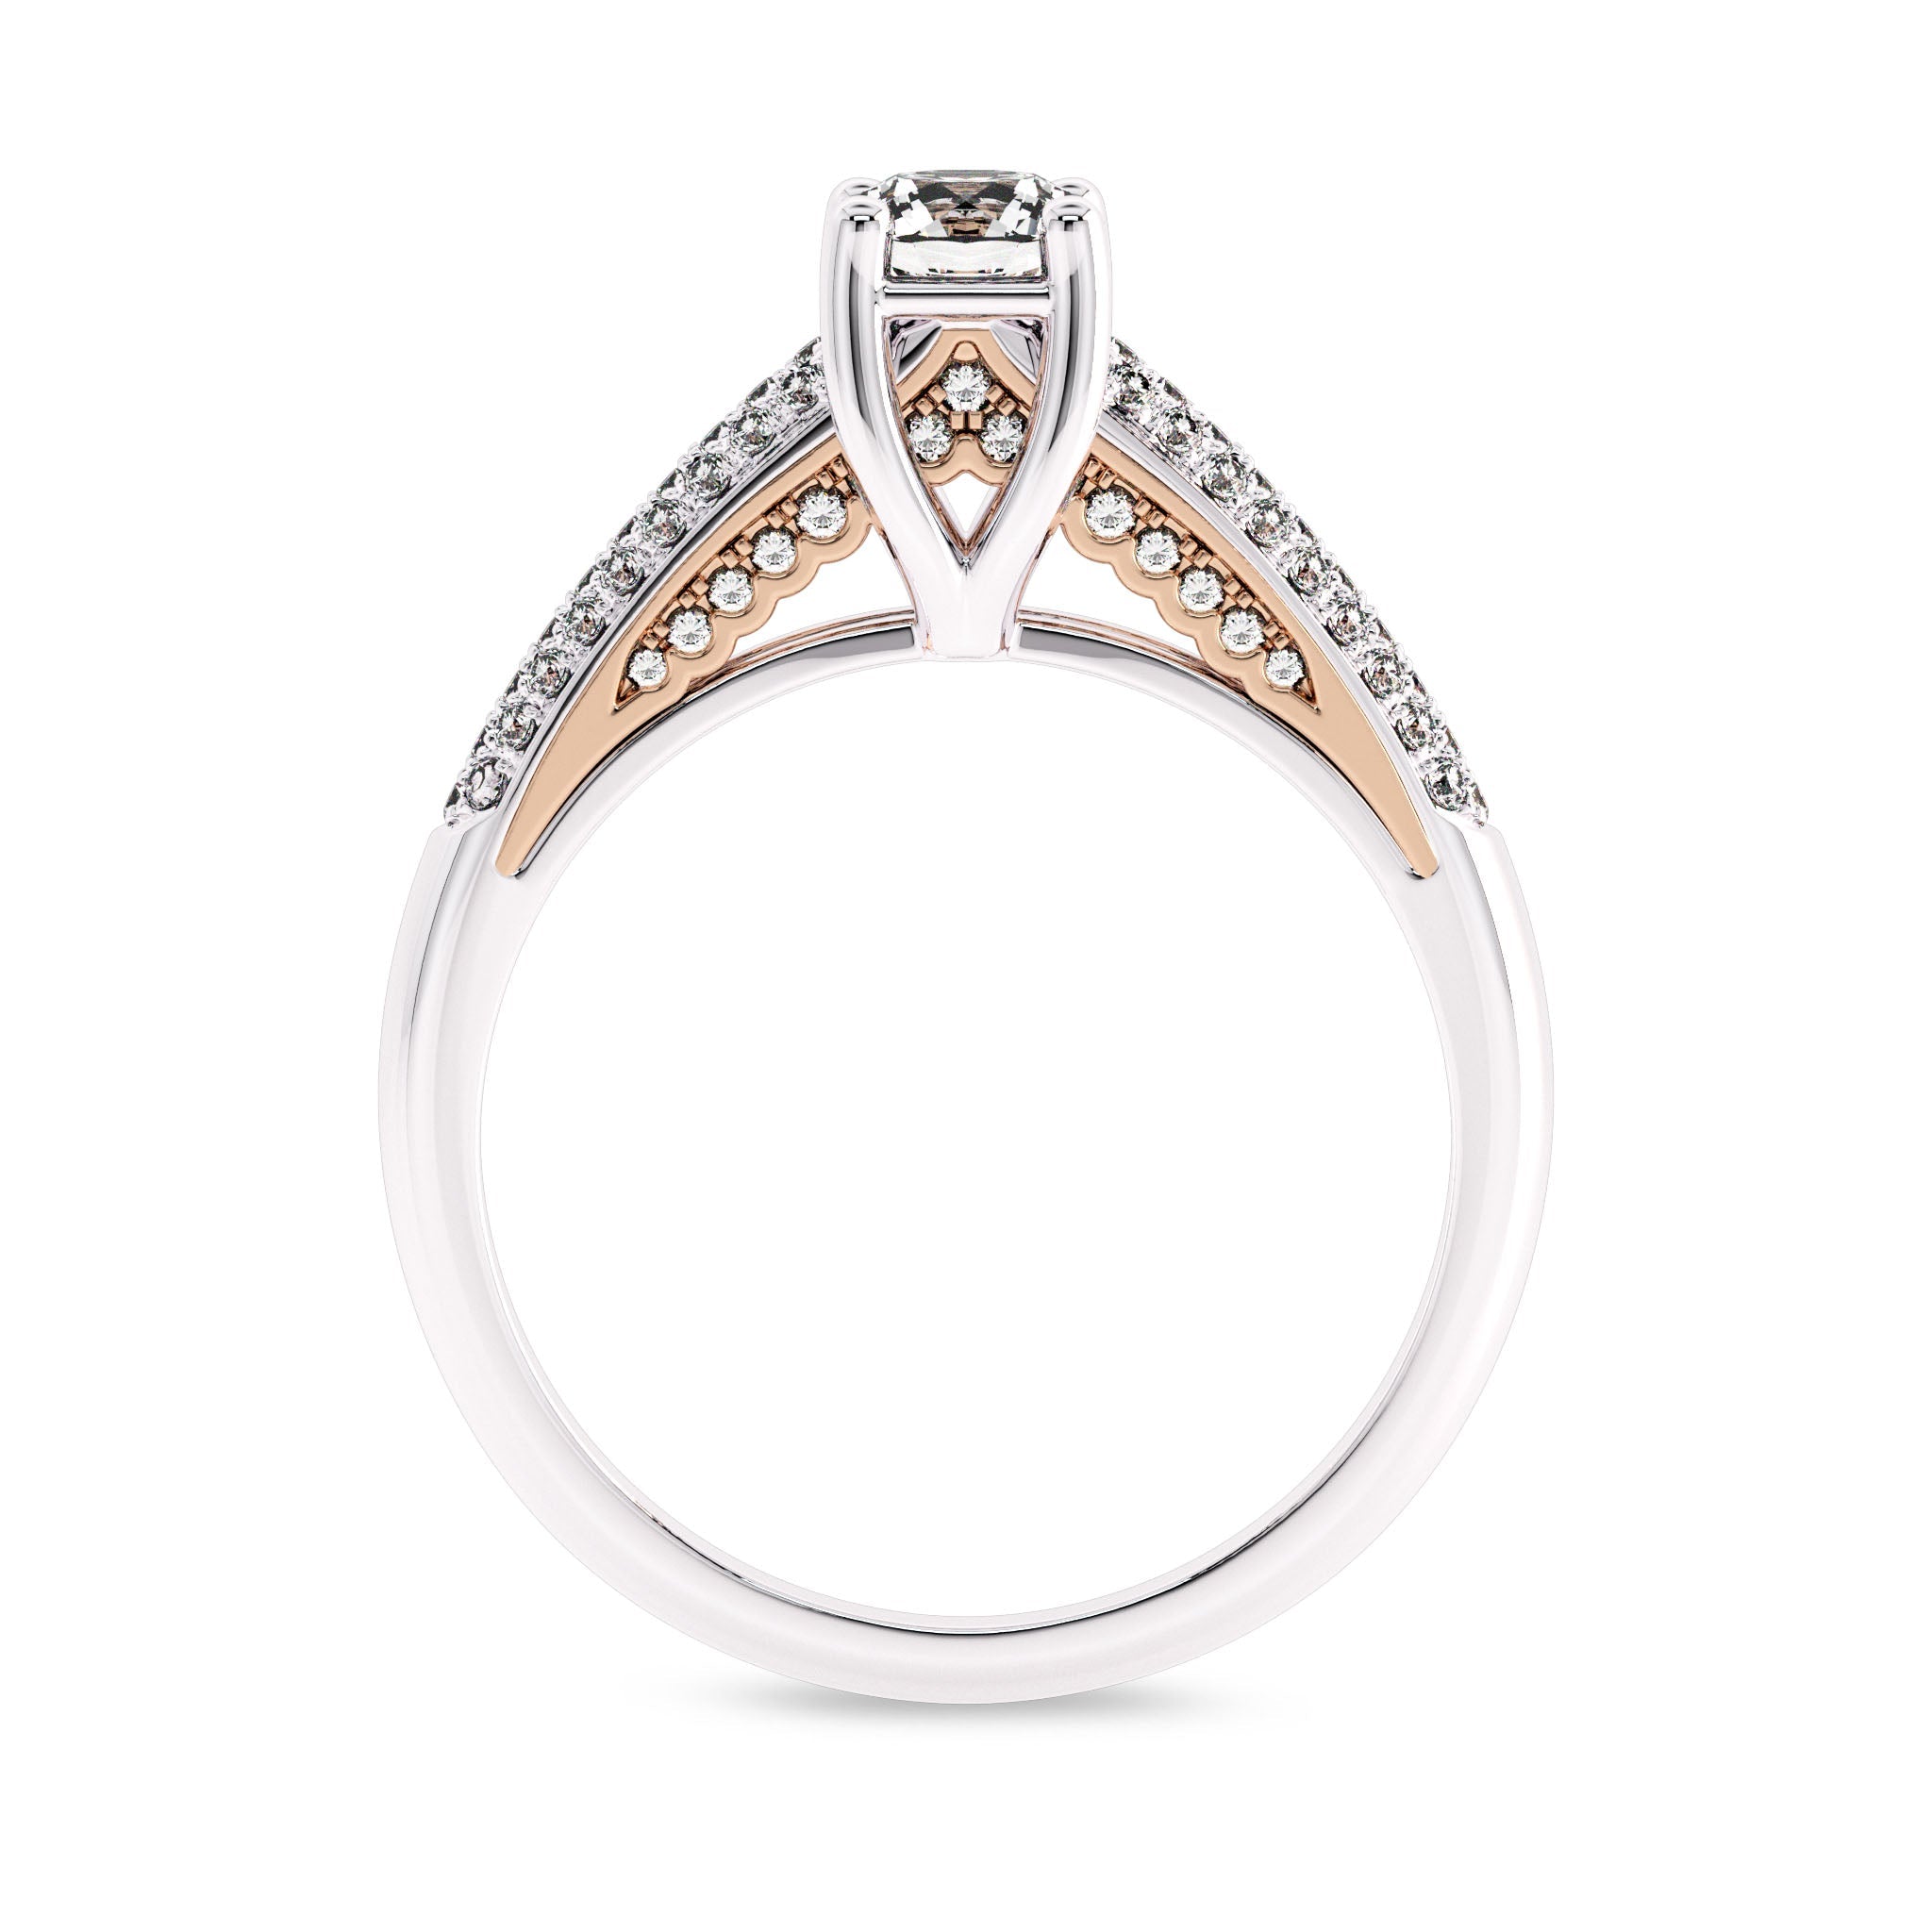 2.8 Carat Diamond Engagement Ring, 14K White Gold, Round Engagement Ring,  Pave Style Engagement Ring, Diamond Ring, Diamond, Free Shipping -   Canada